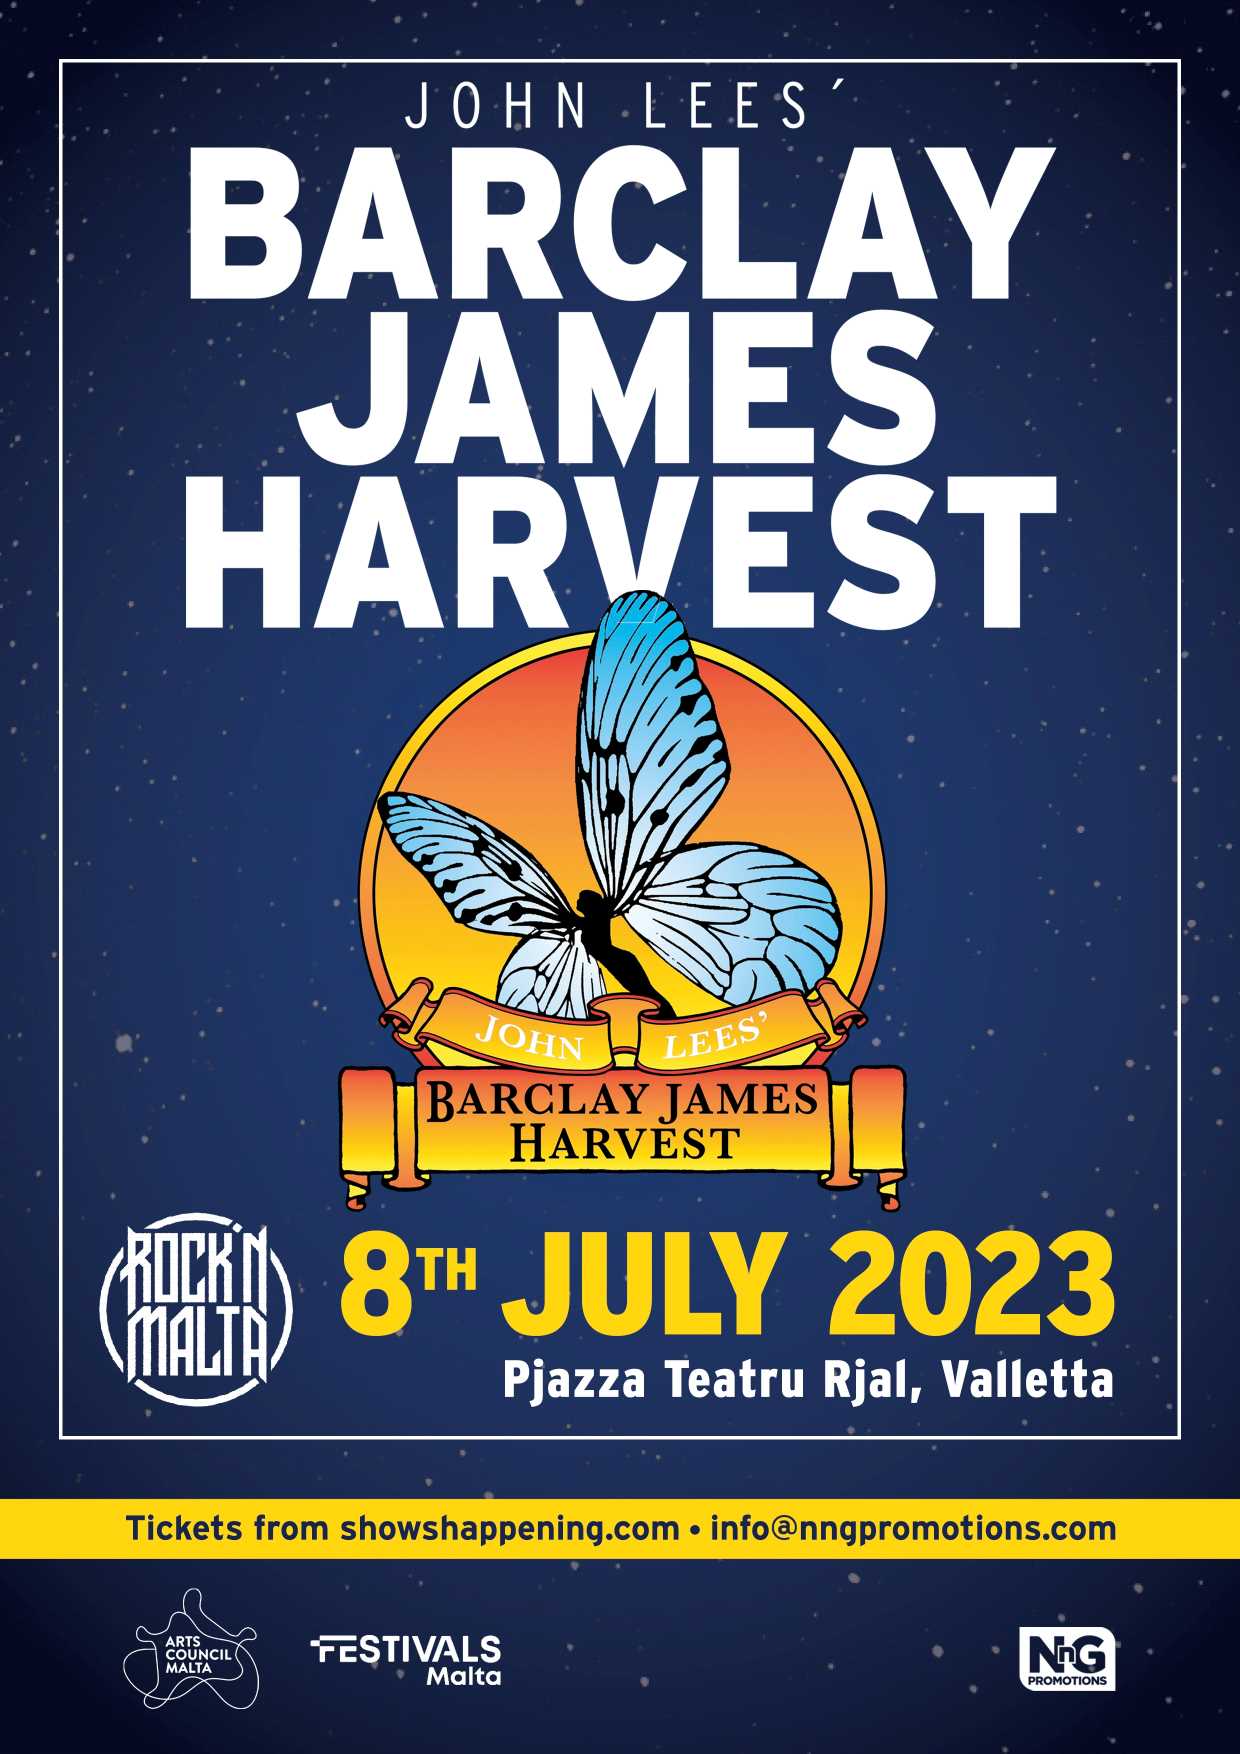 John Lees Barclay James Harvest poster